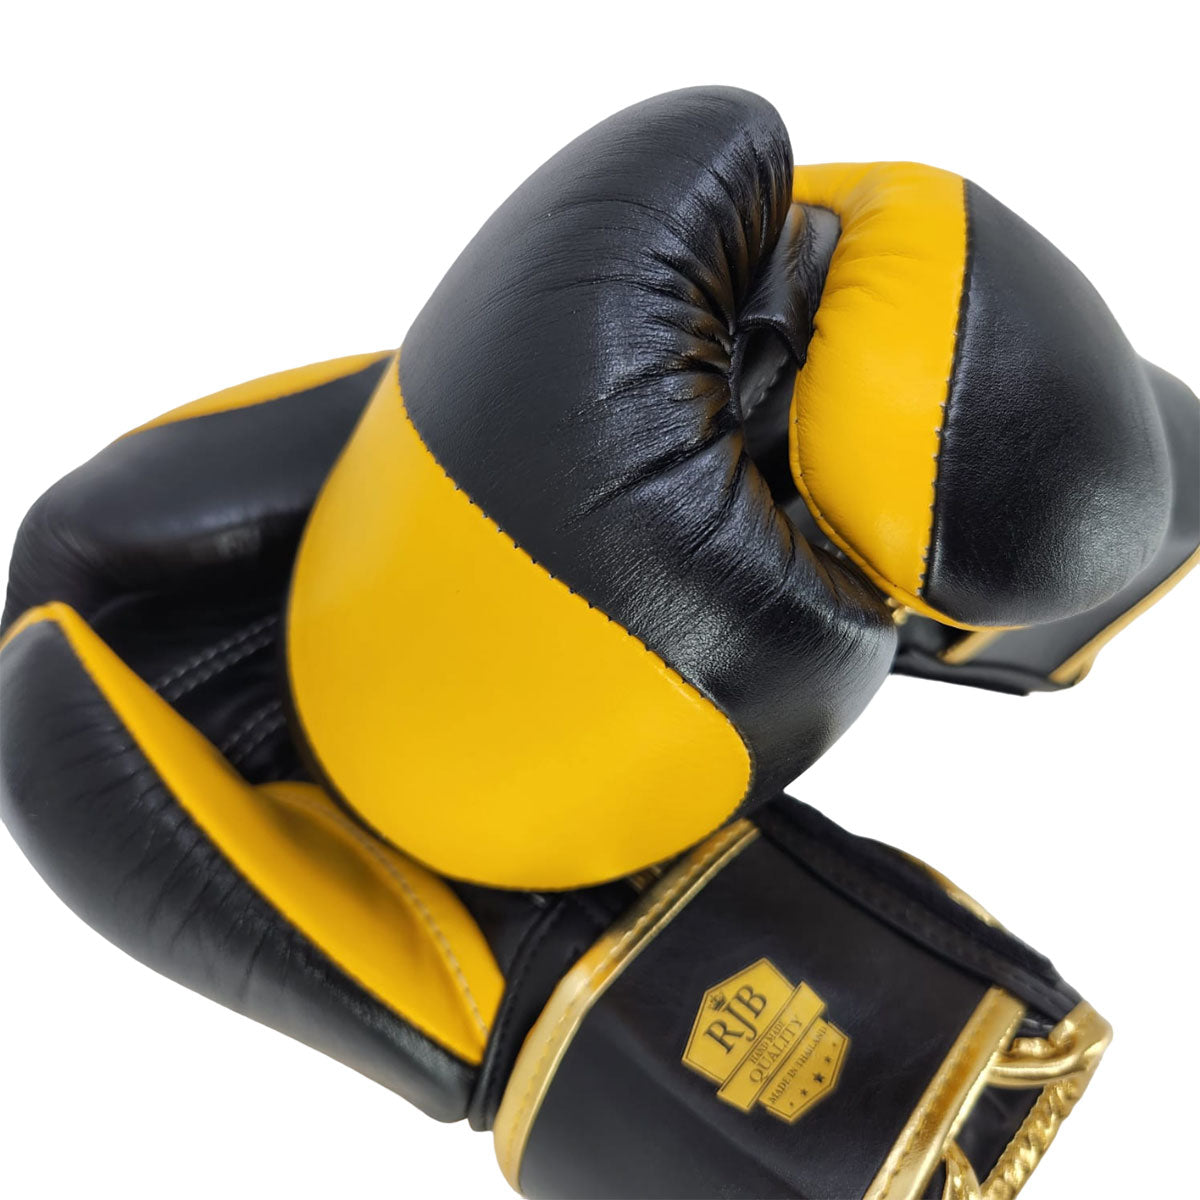 Boxing Gloves Raja RJB-P3 Yellow Premium "RAJA Crawl" Muay Thai